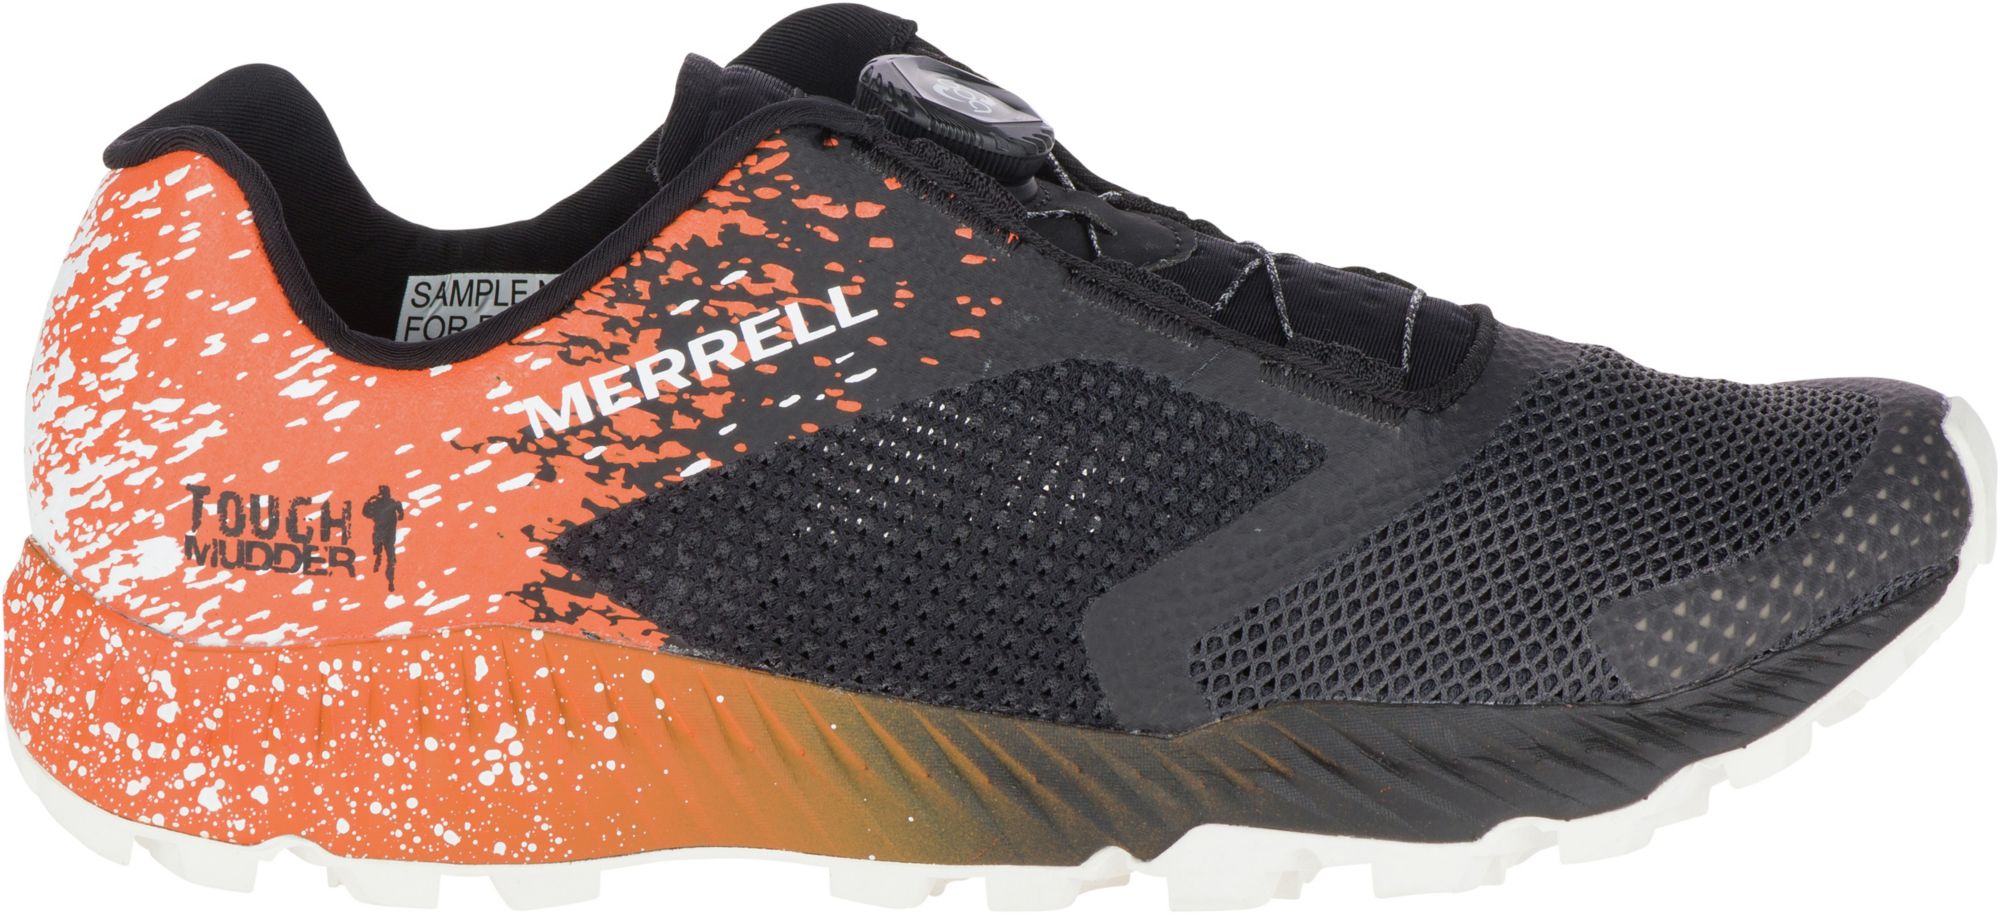 merrell shoes trail running